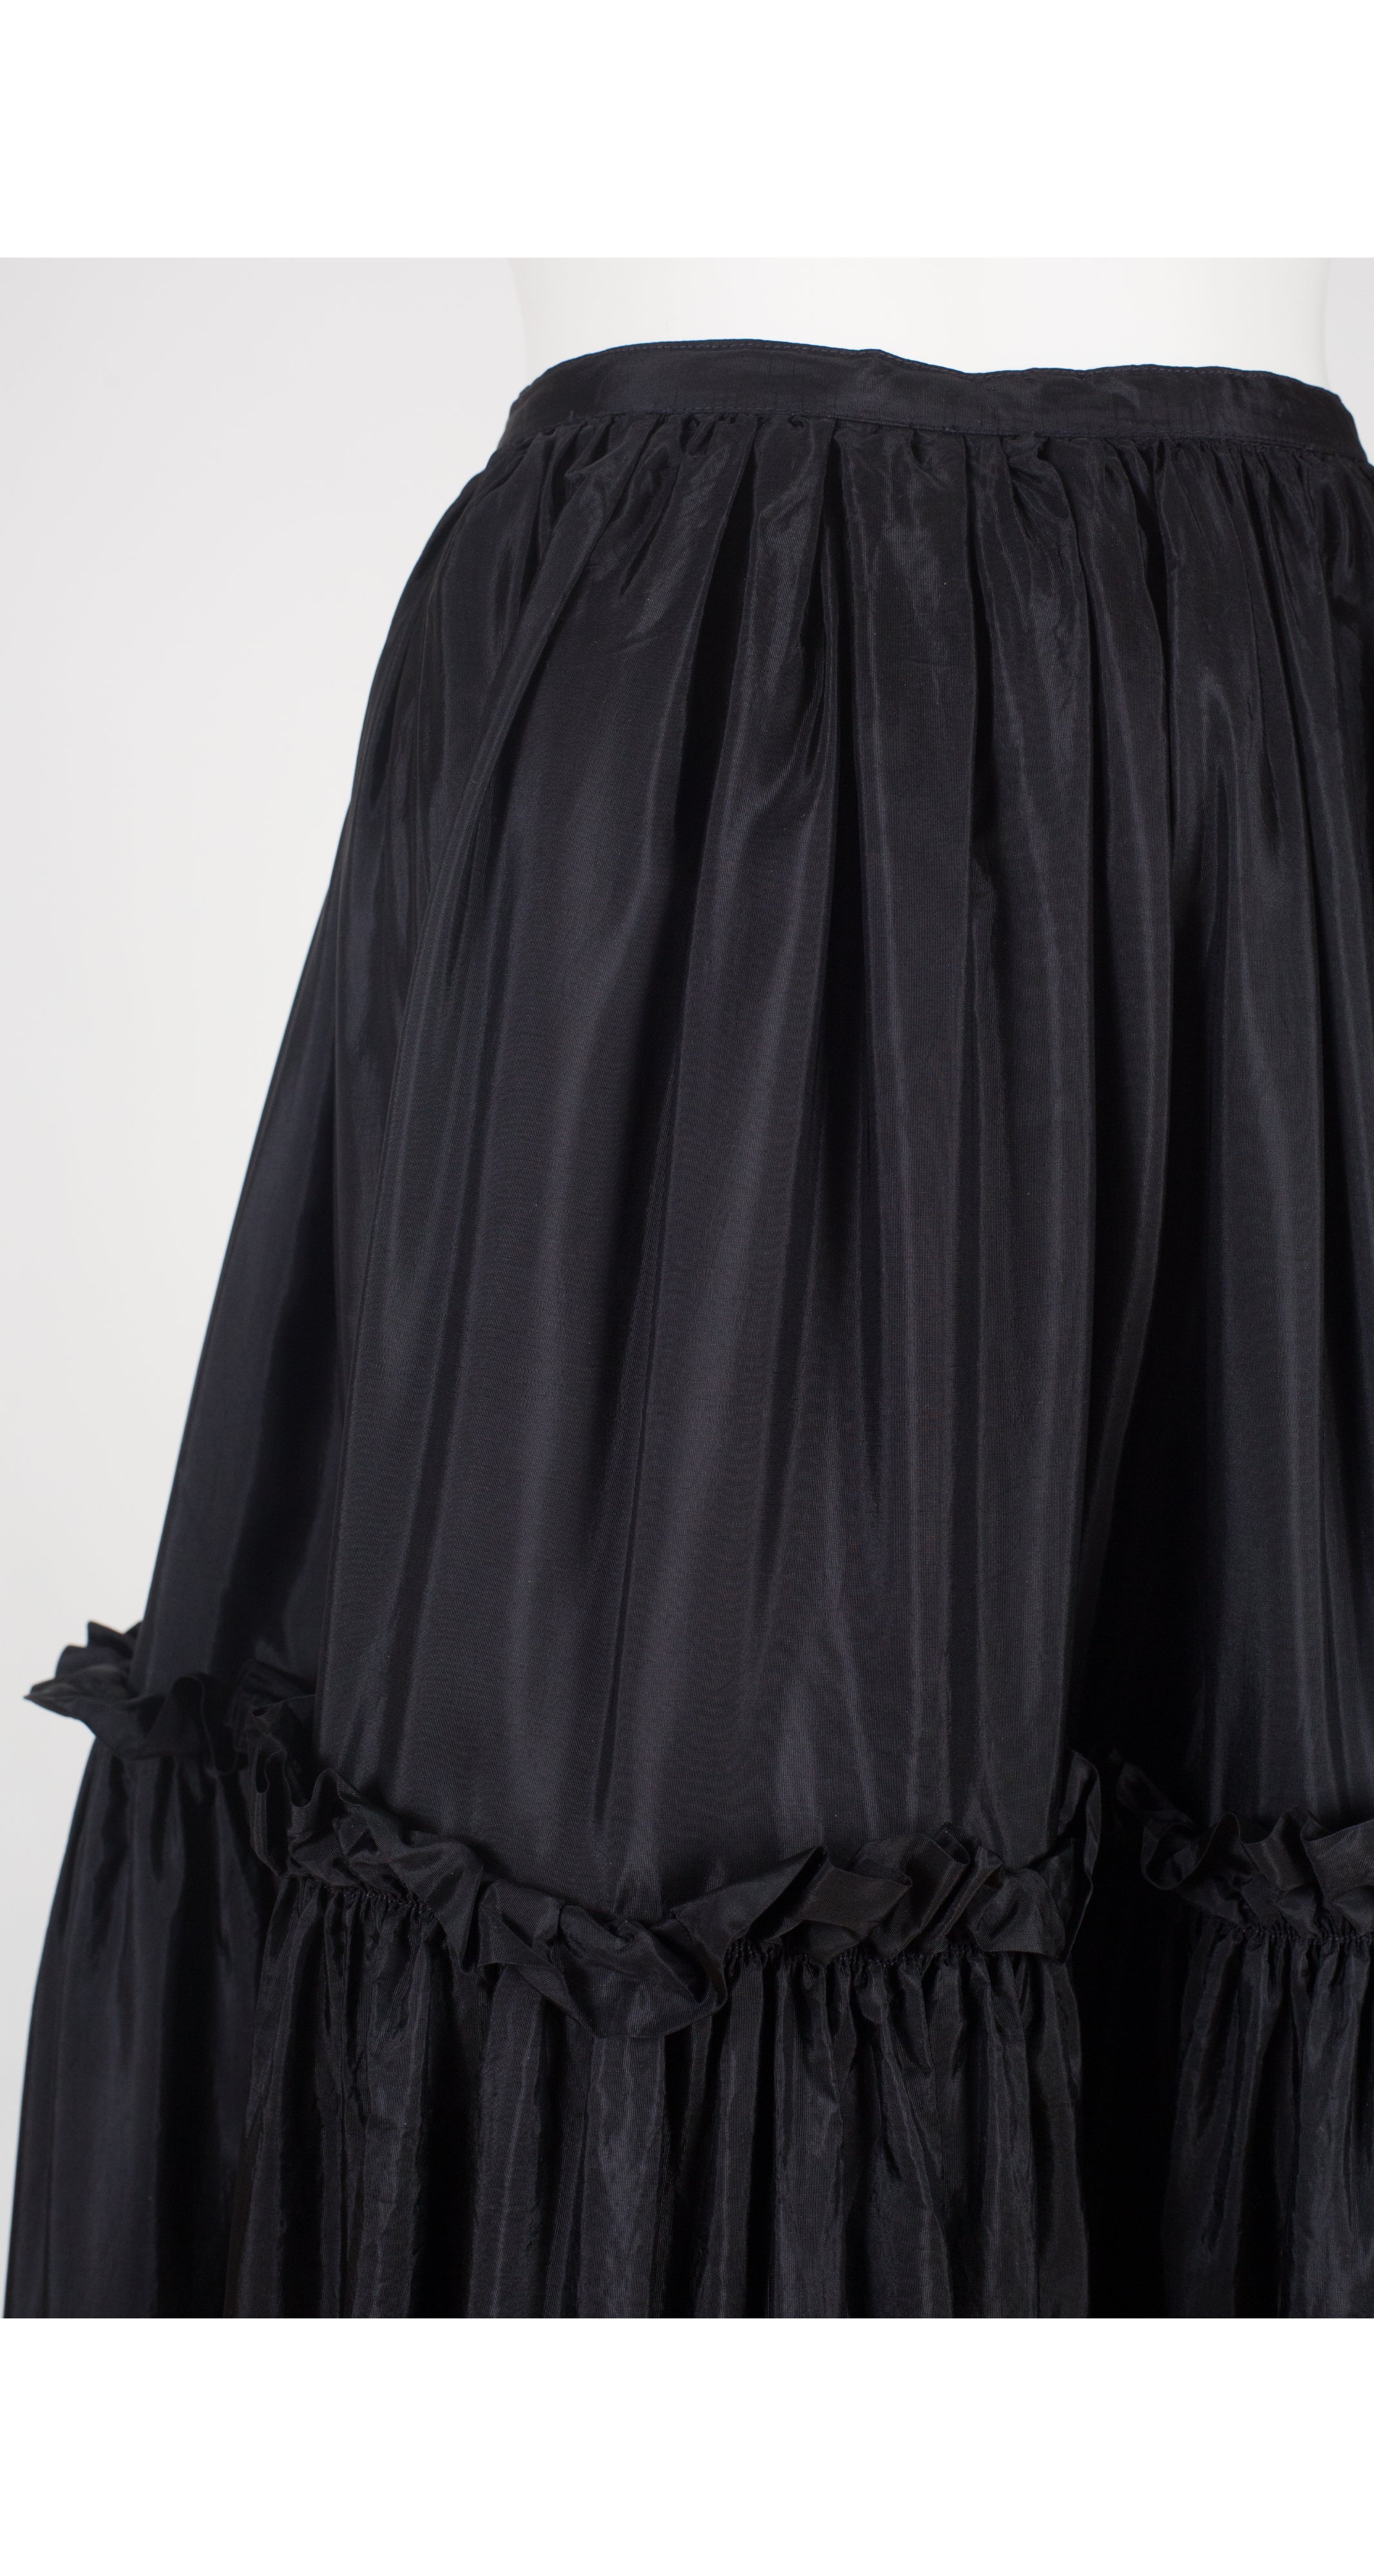 1980s Black Silk Taffeta Ruffle Floor-Length Skirt